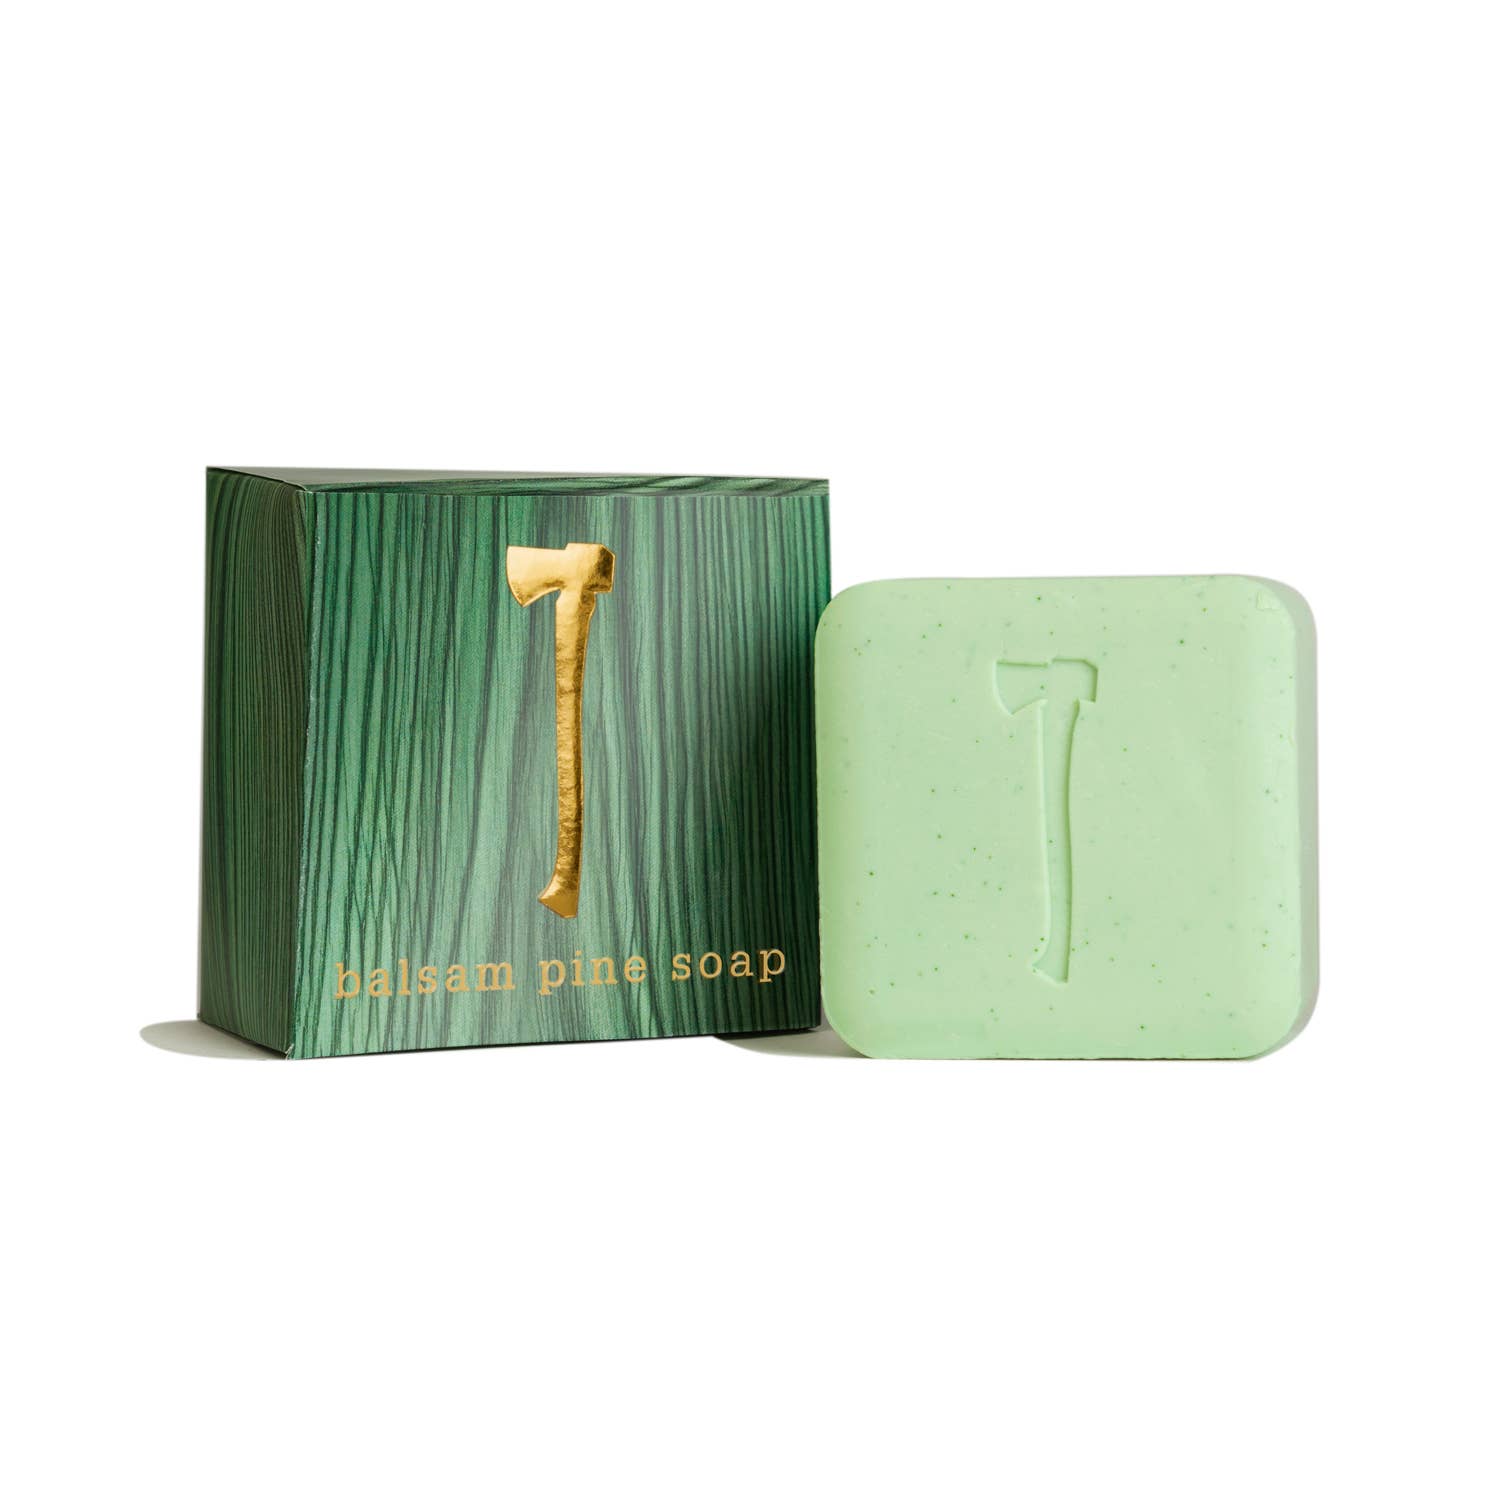 Soap: Balsam Pine Soap